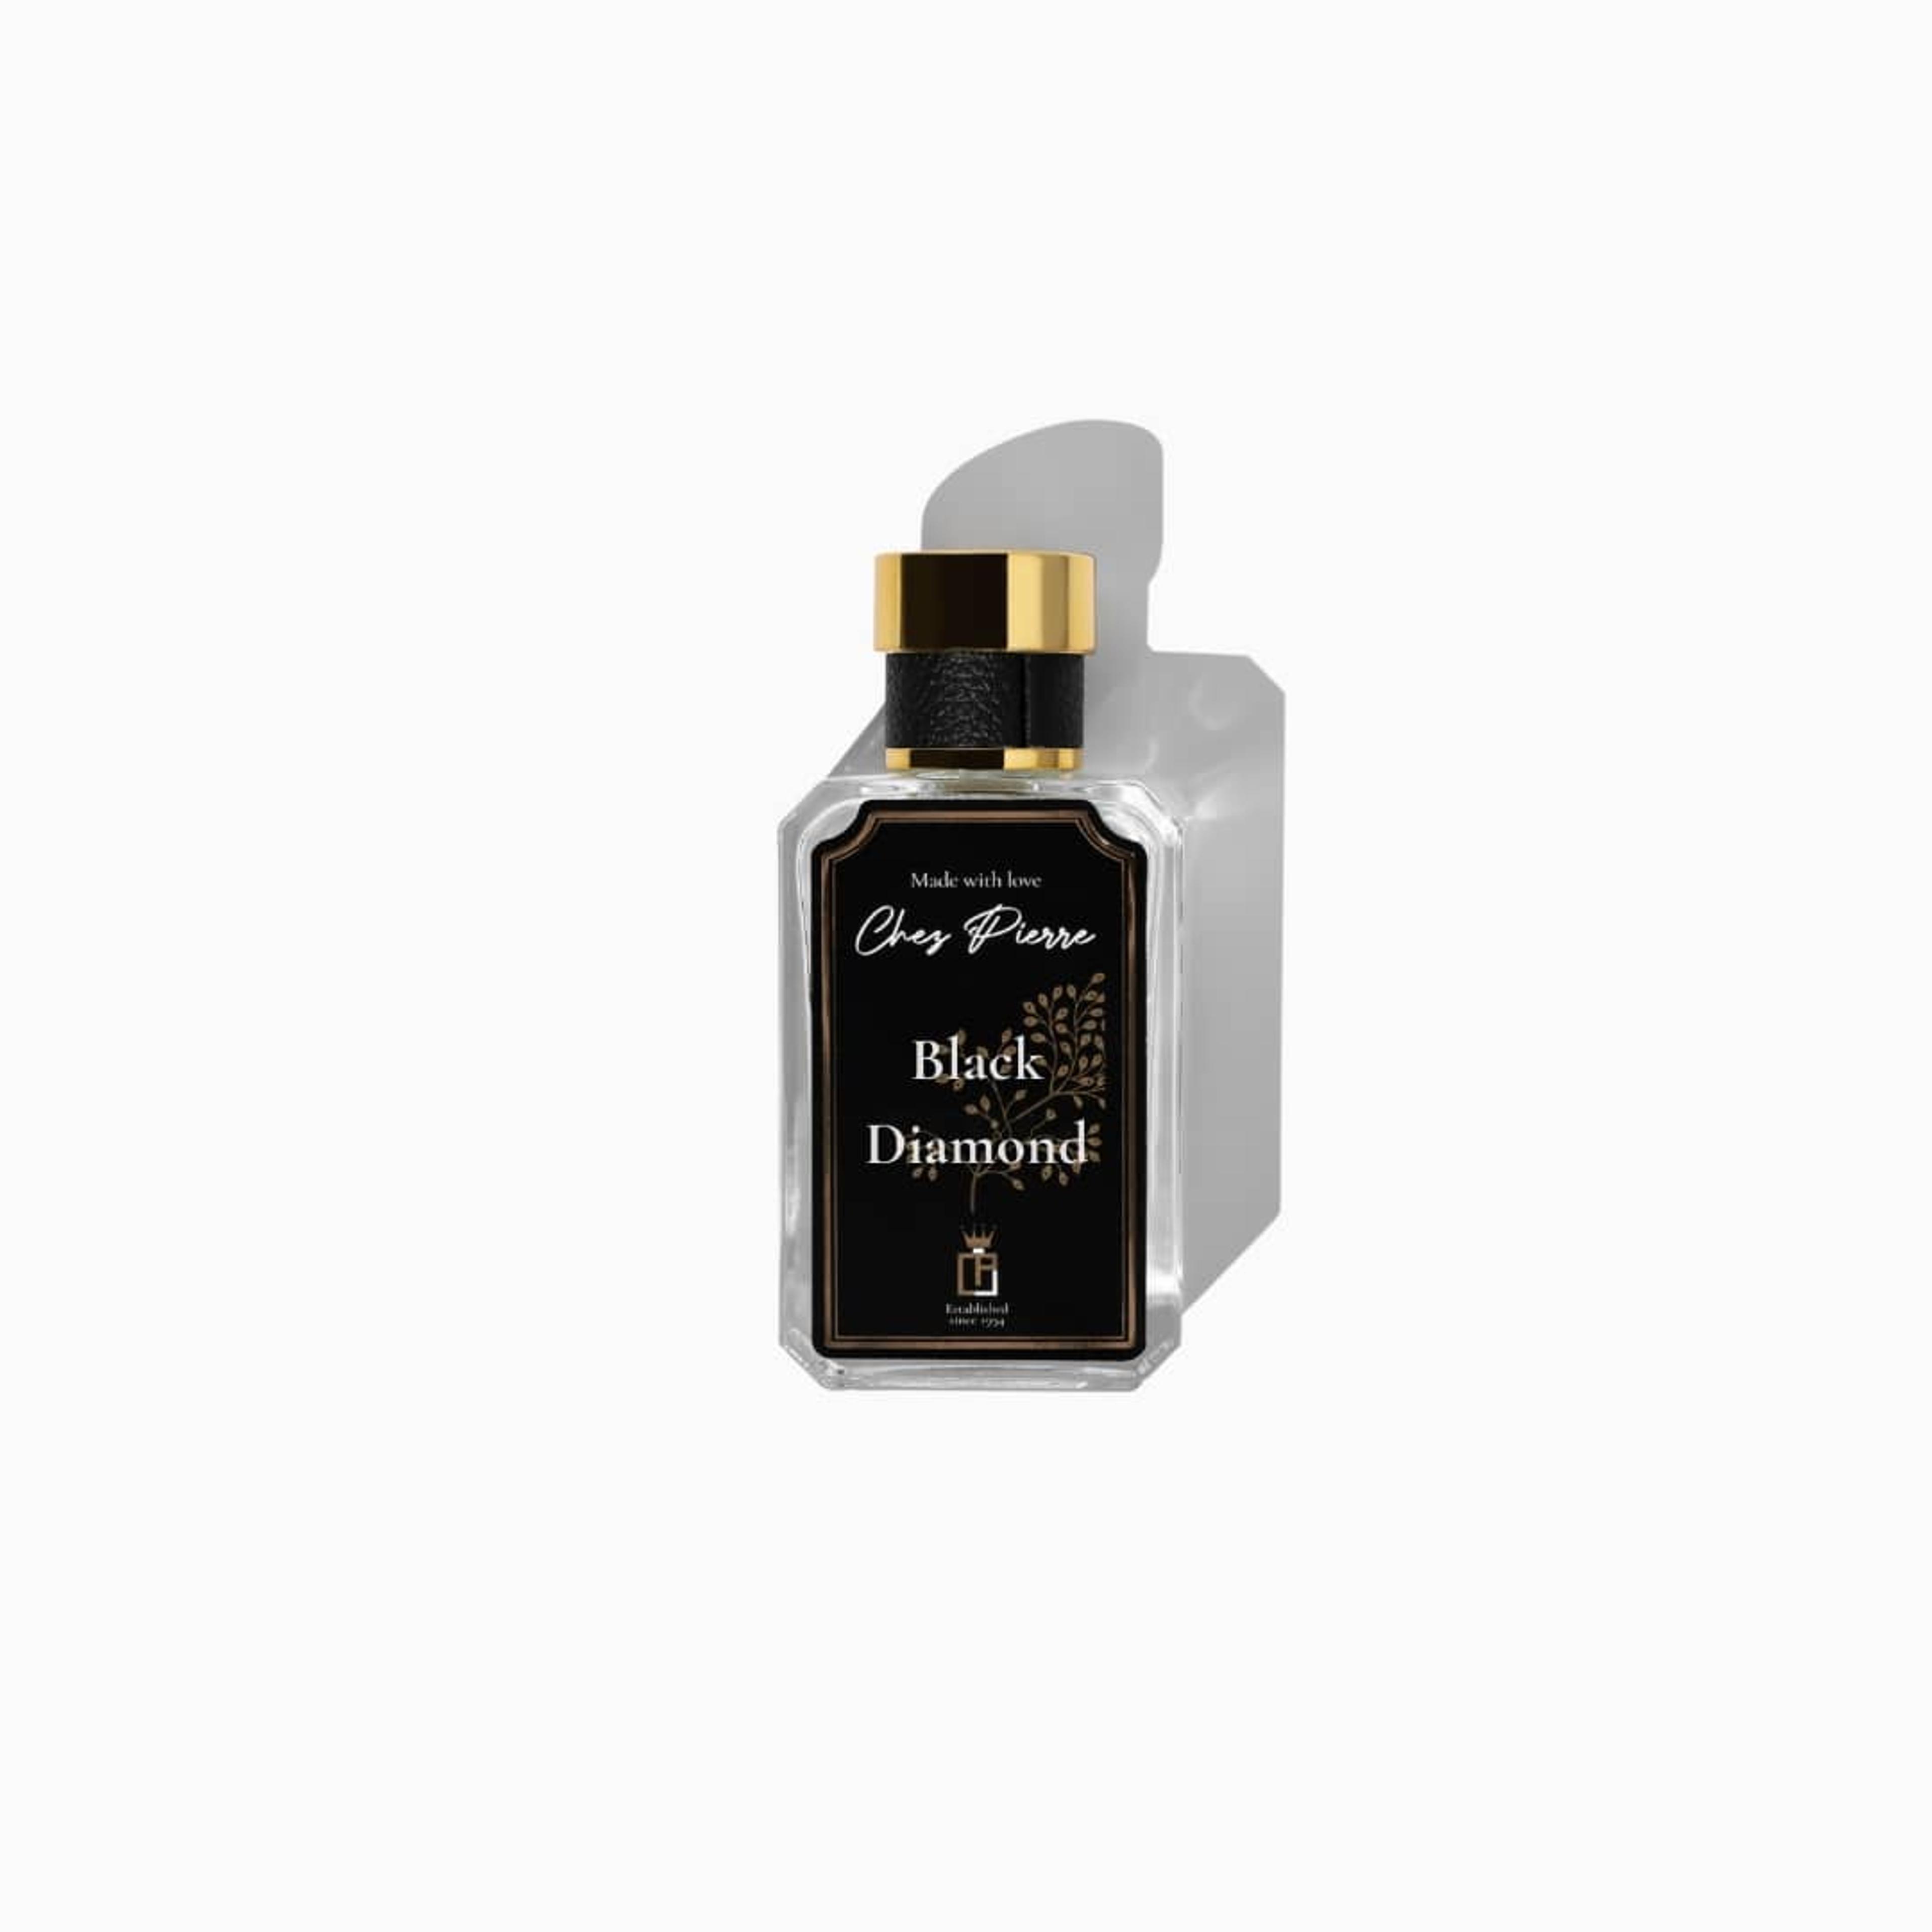 Chez Pierre's Black Diamond Perfume Inspired By Crystal Noir Perfume